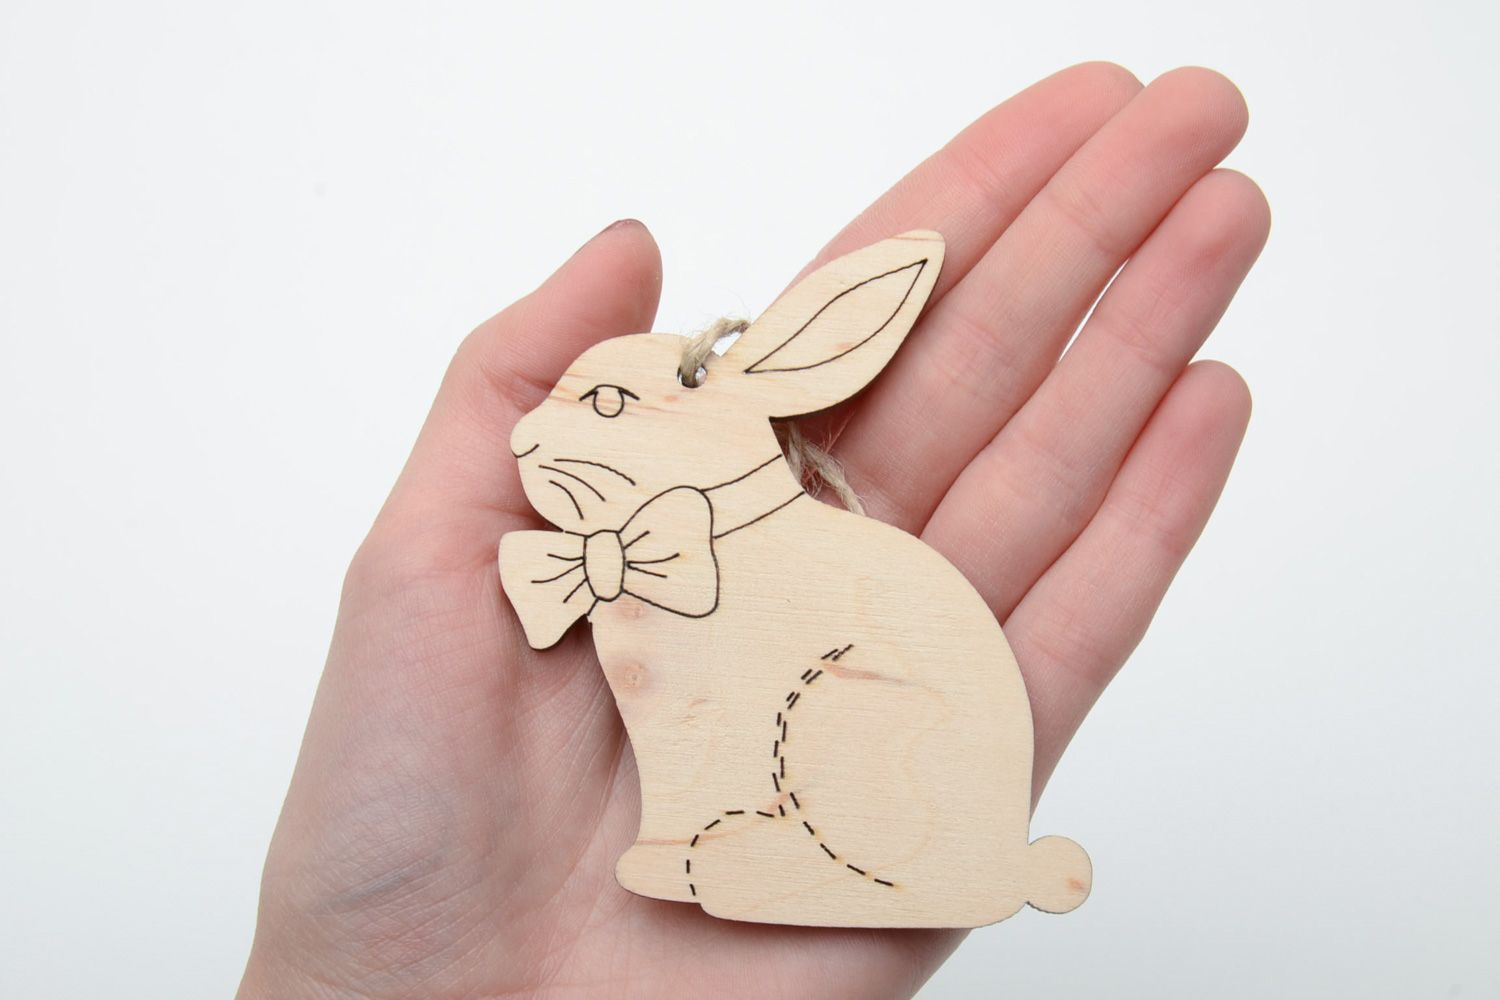 Homemade plywood craft blank rabbit figurine photo 5